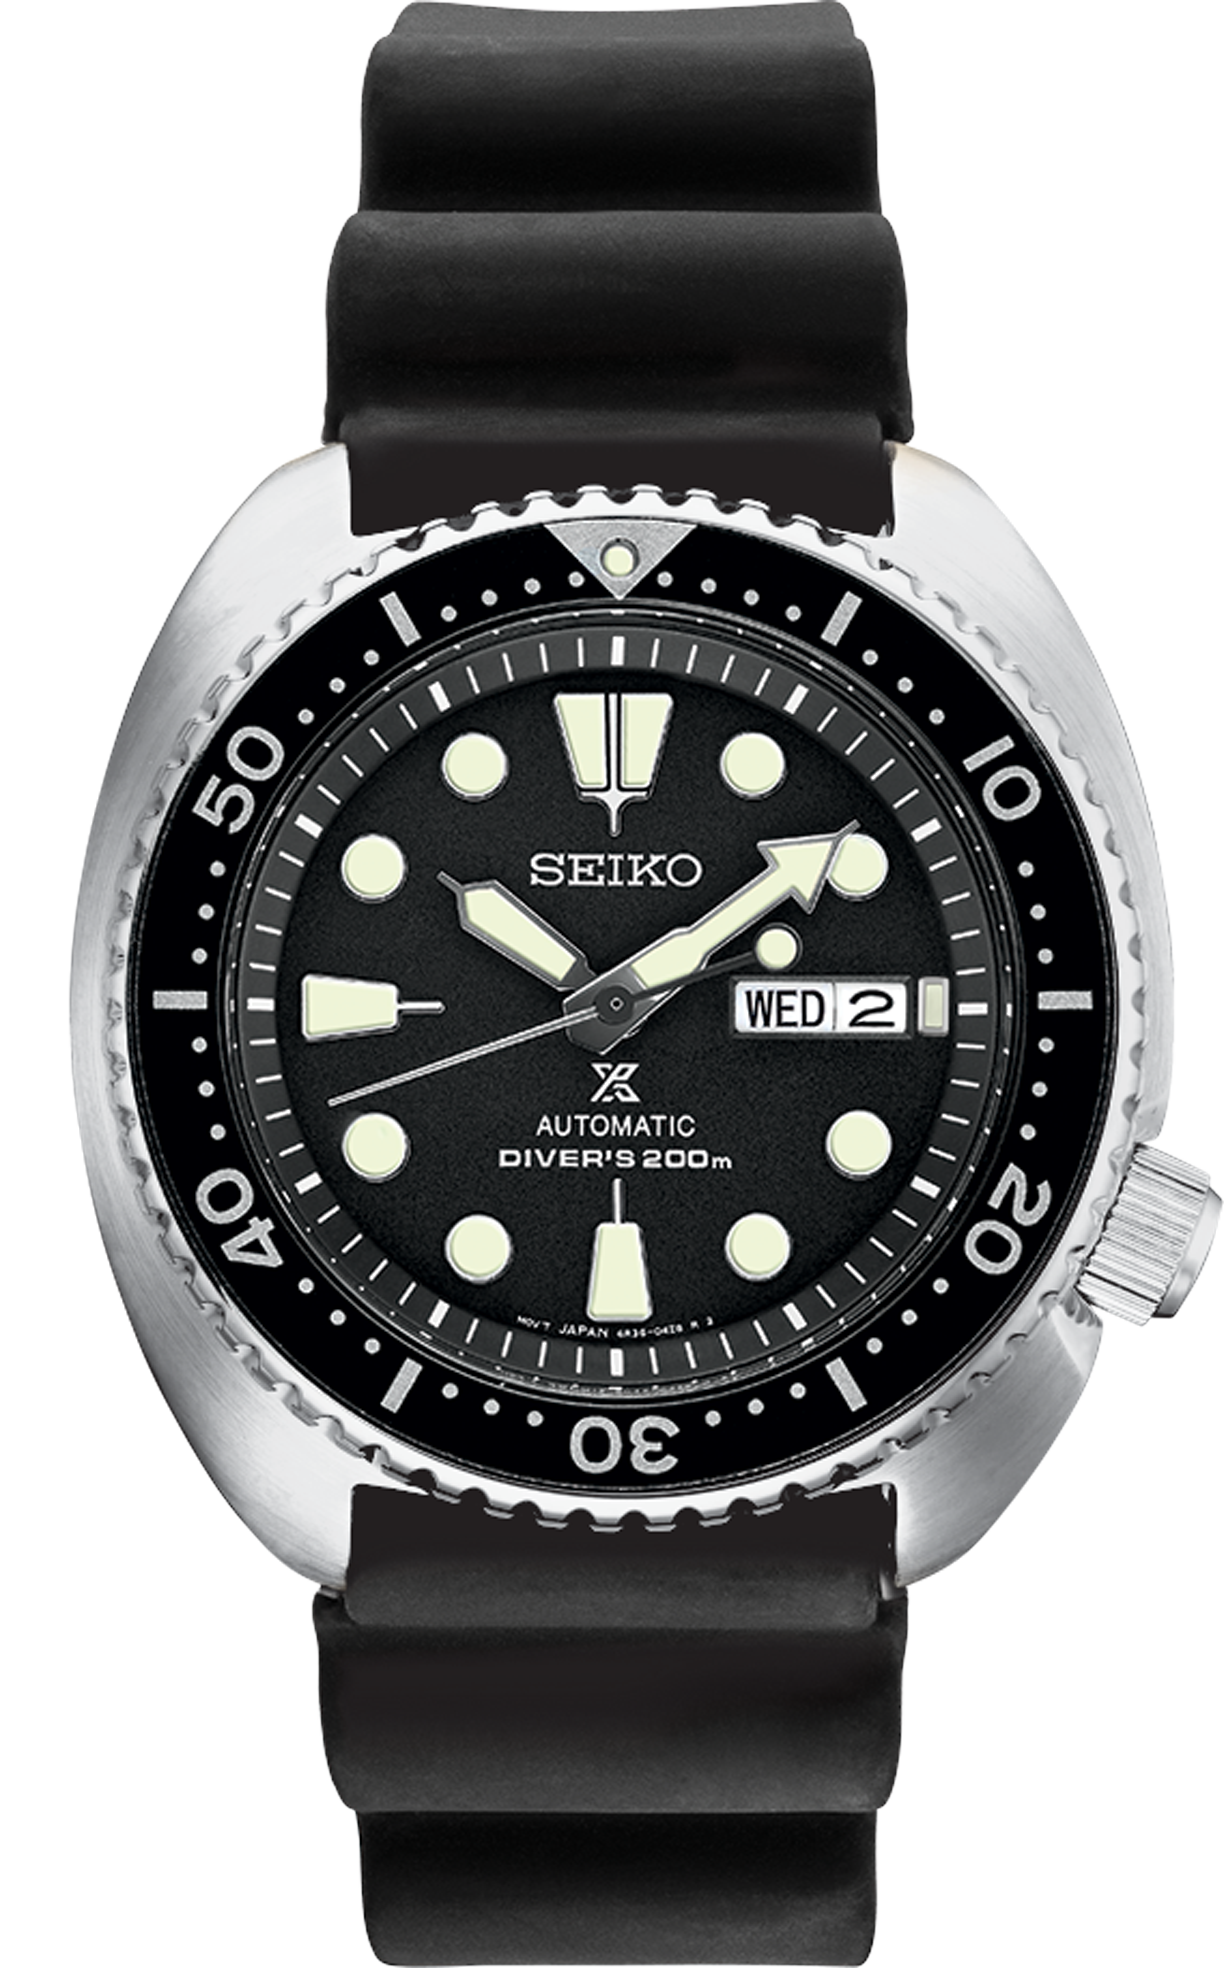 SRPE93 Prospex Automatic Diver